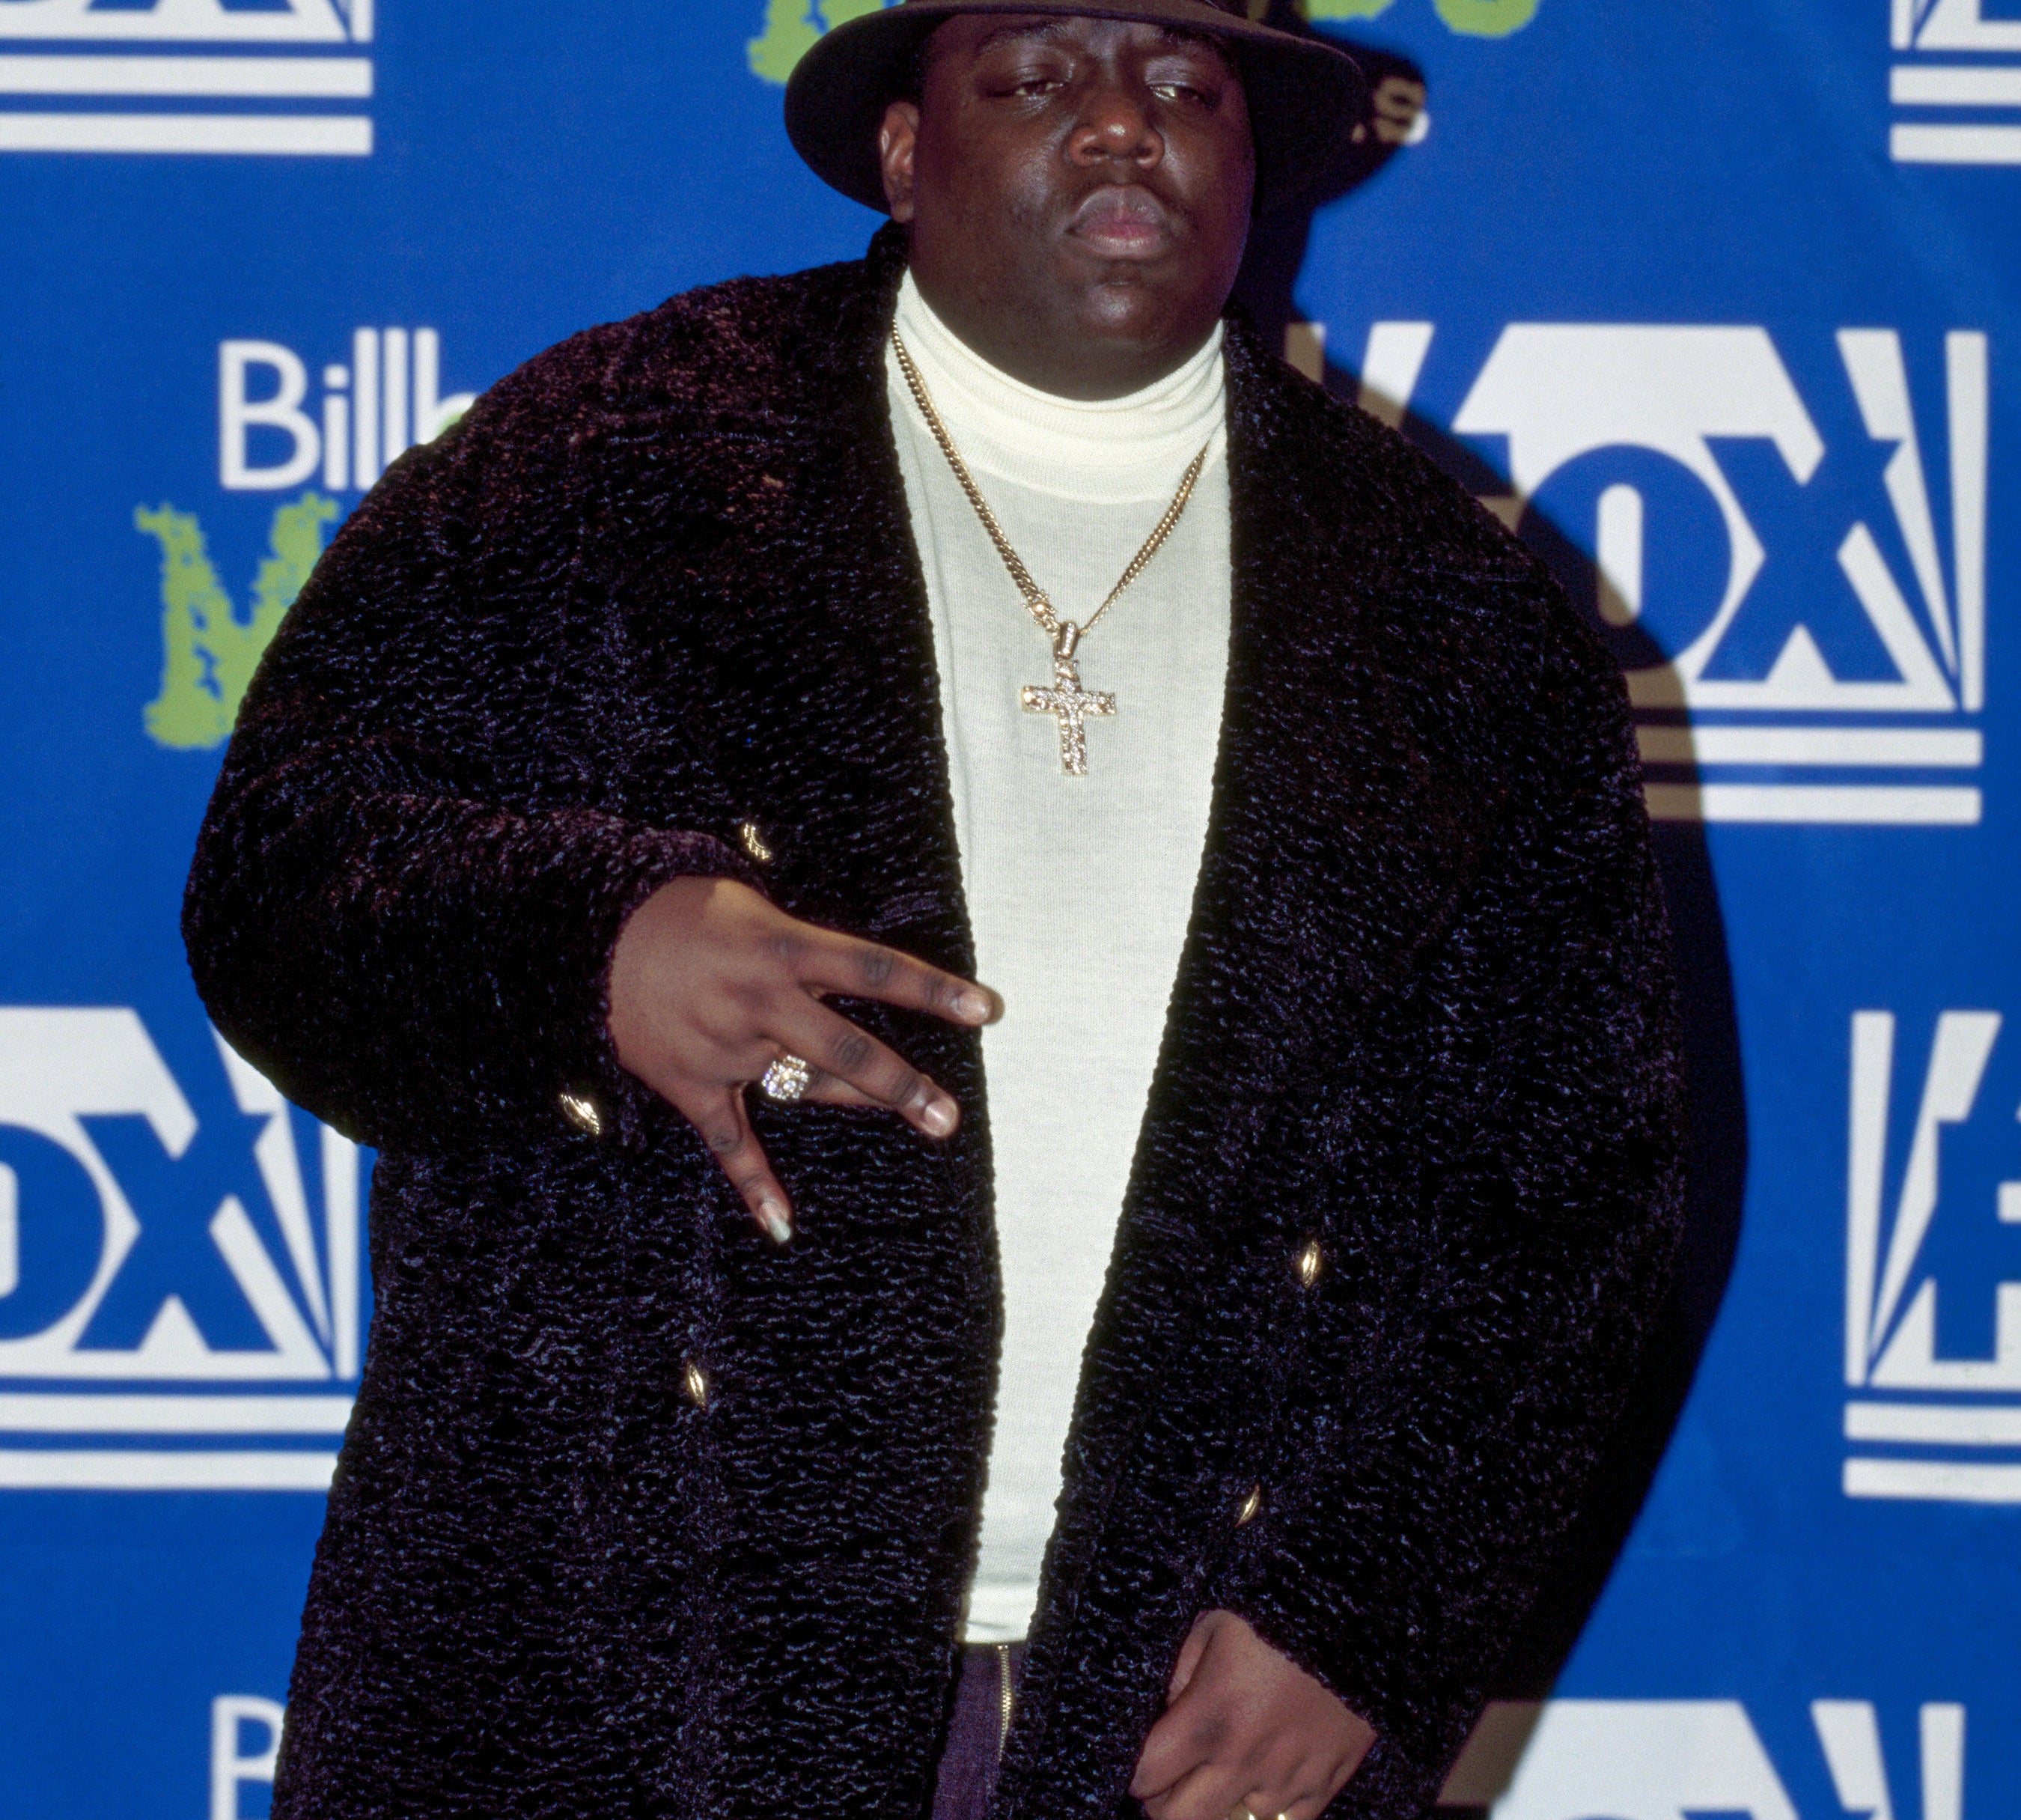 Rapper Notorious B.I.G., aka Biggie Smalls (Christopher Wallace), receives Billboard Music Award on December 6, 1995